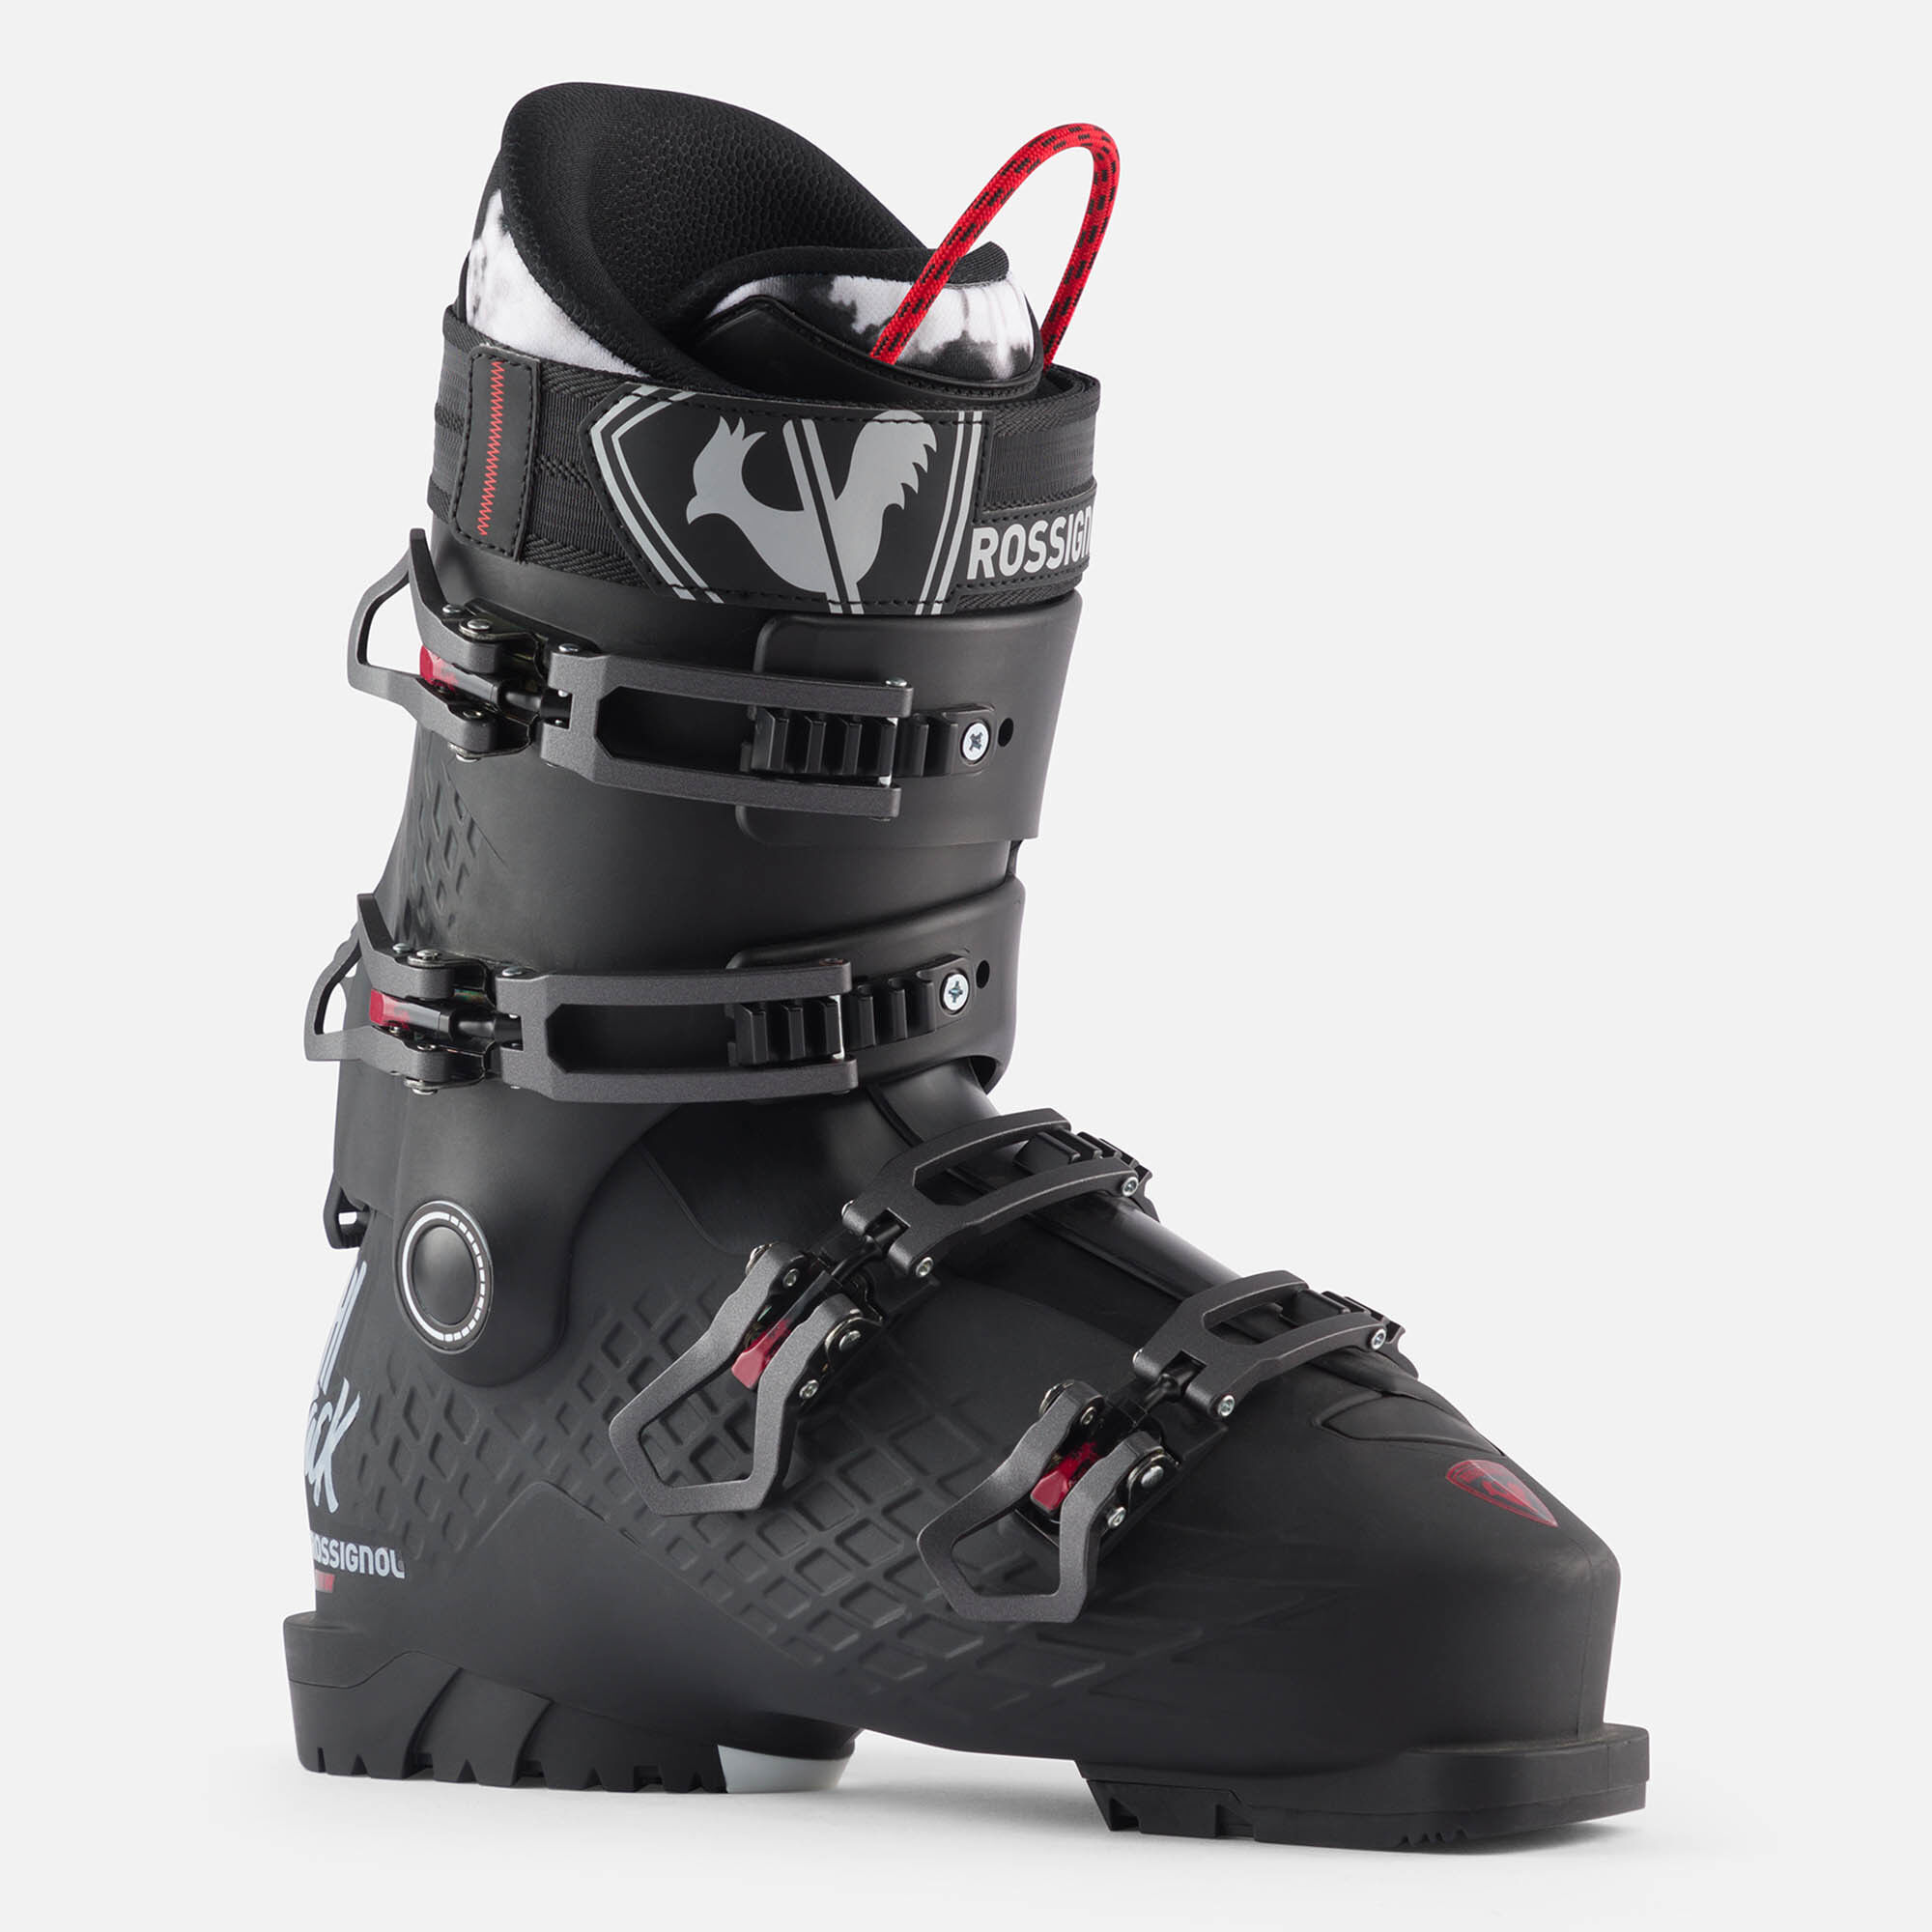 Ski boots, accessories, gripwalk soles | Rossignol